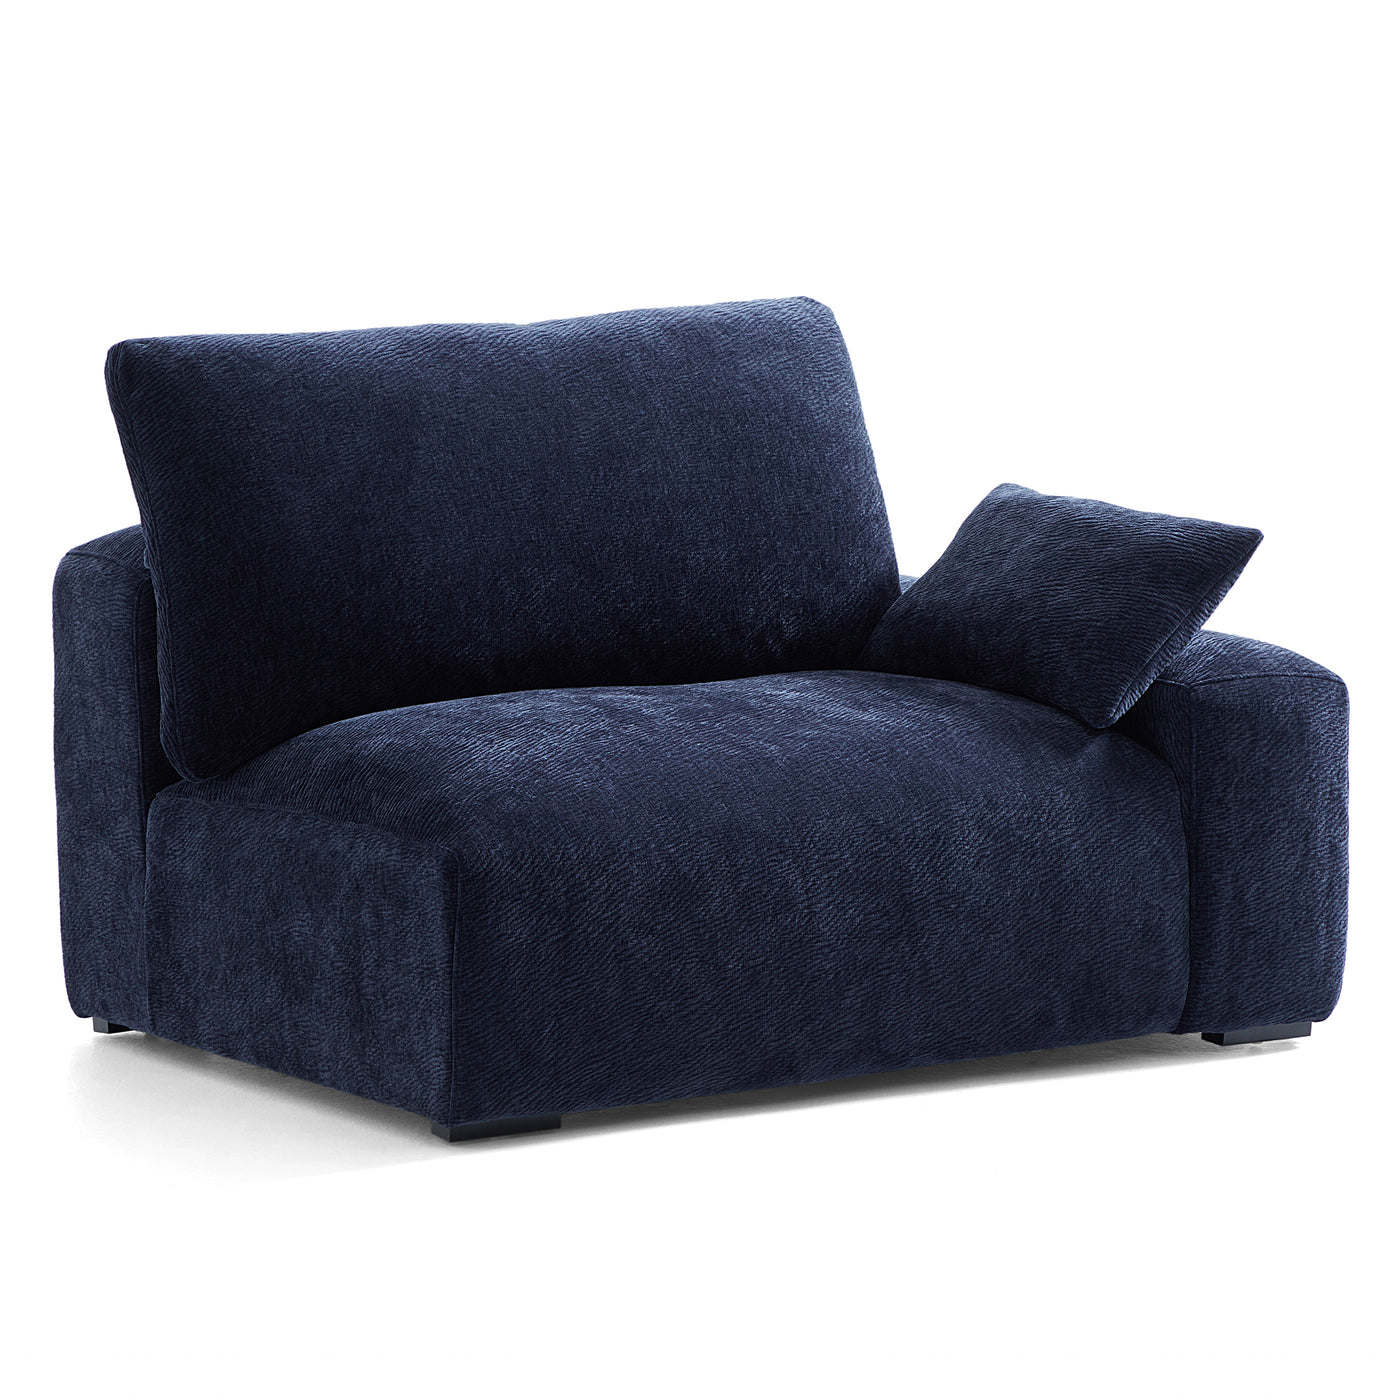 The Empress Navy Blue Sofa-Navy Blue